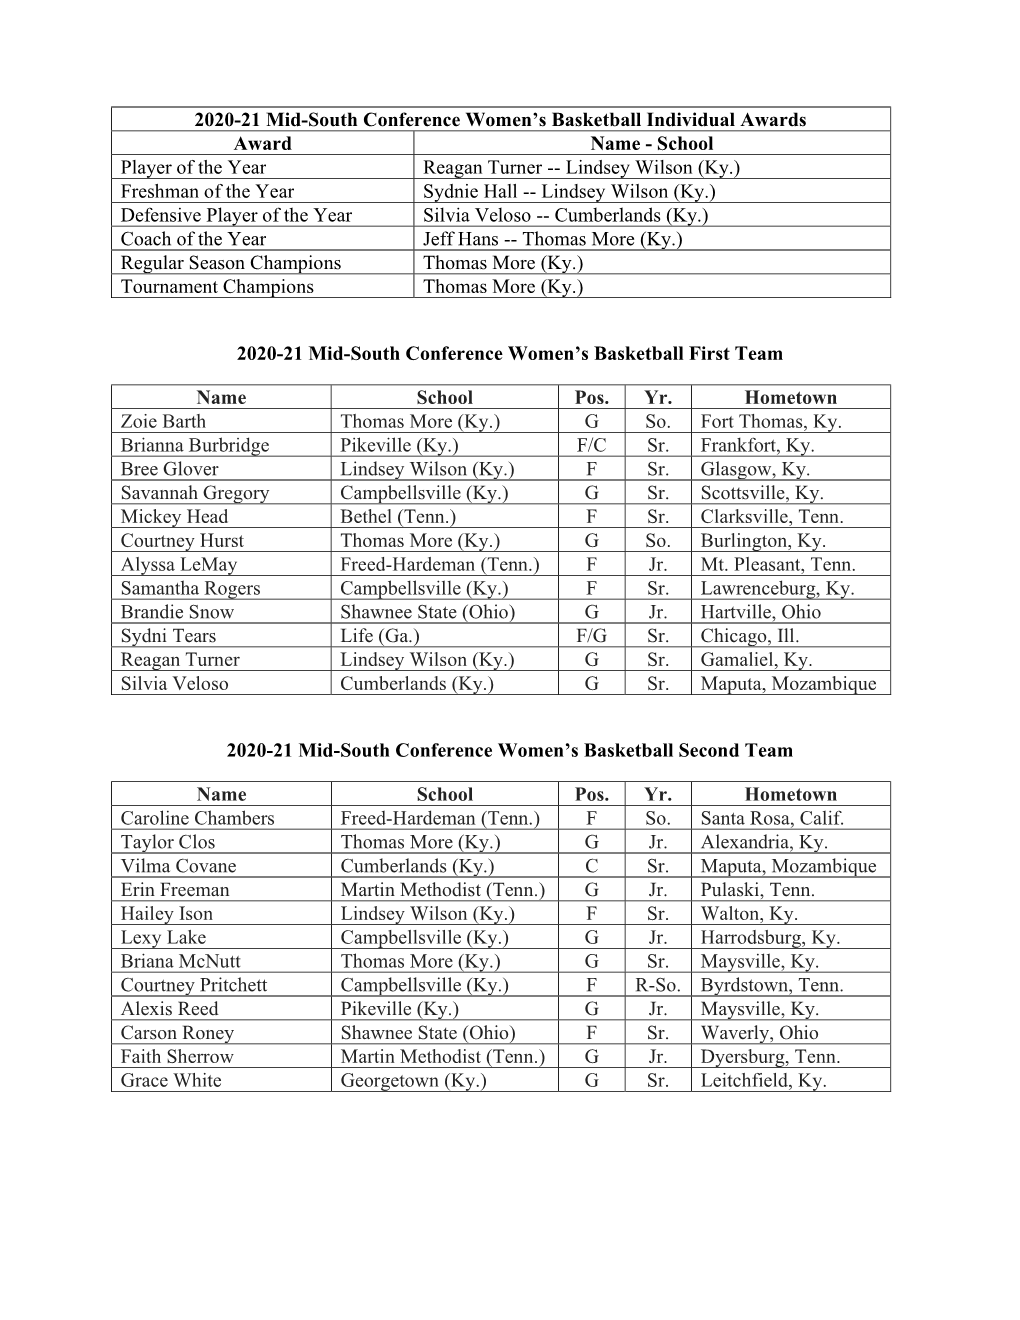 2020-21 Mid-South Conference Women's Basketball Individual Awards Award Name